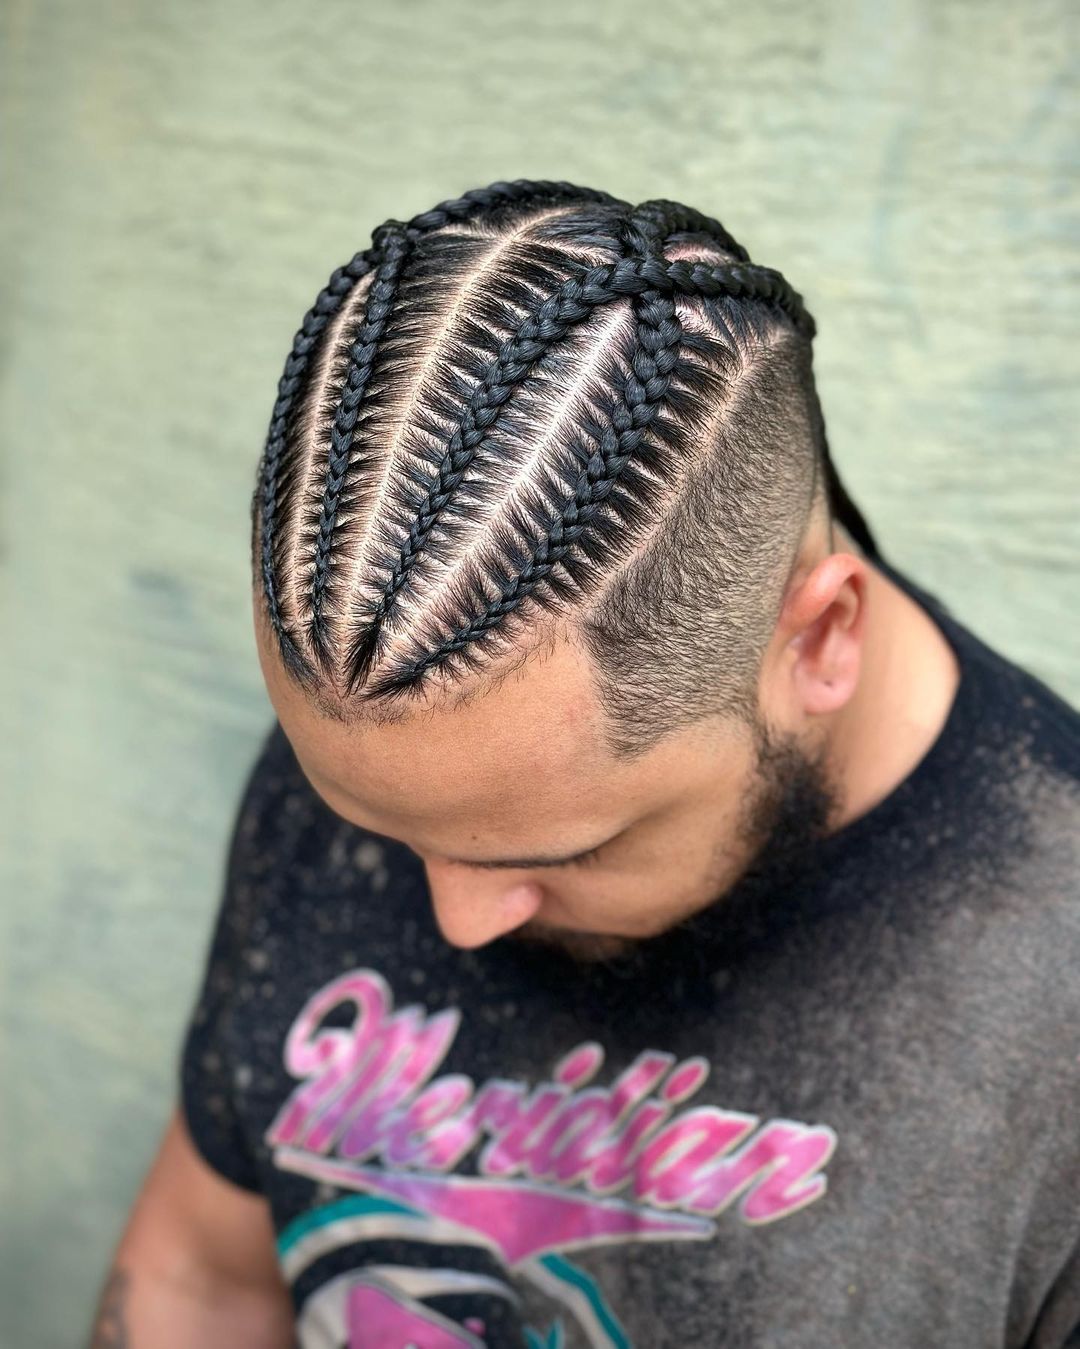 Braid Hairstyles for men 119 Black male braids short hair | Box braids men | Braid styles for men gallery Braid Hairstyles for Men